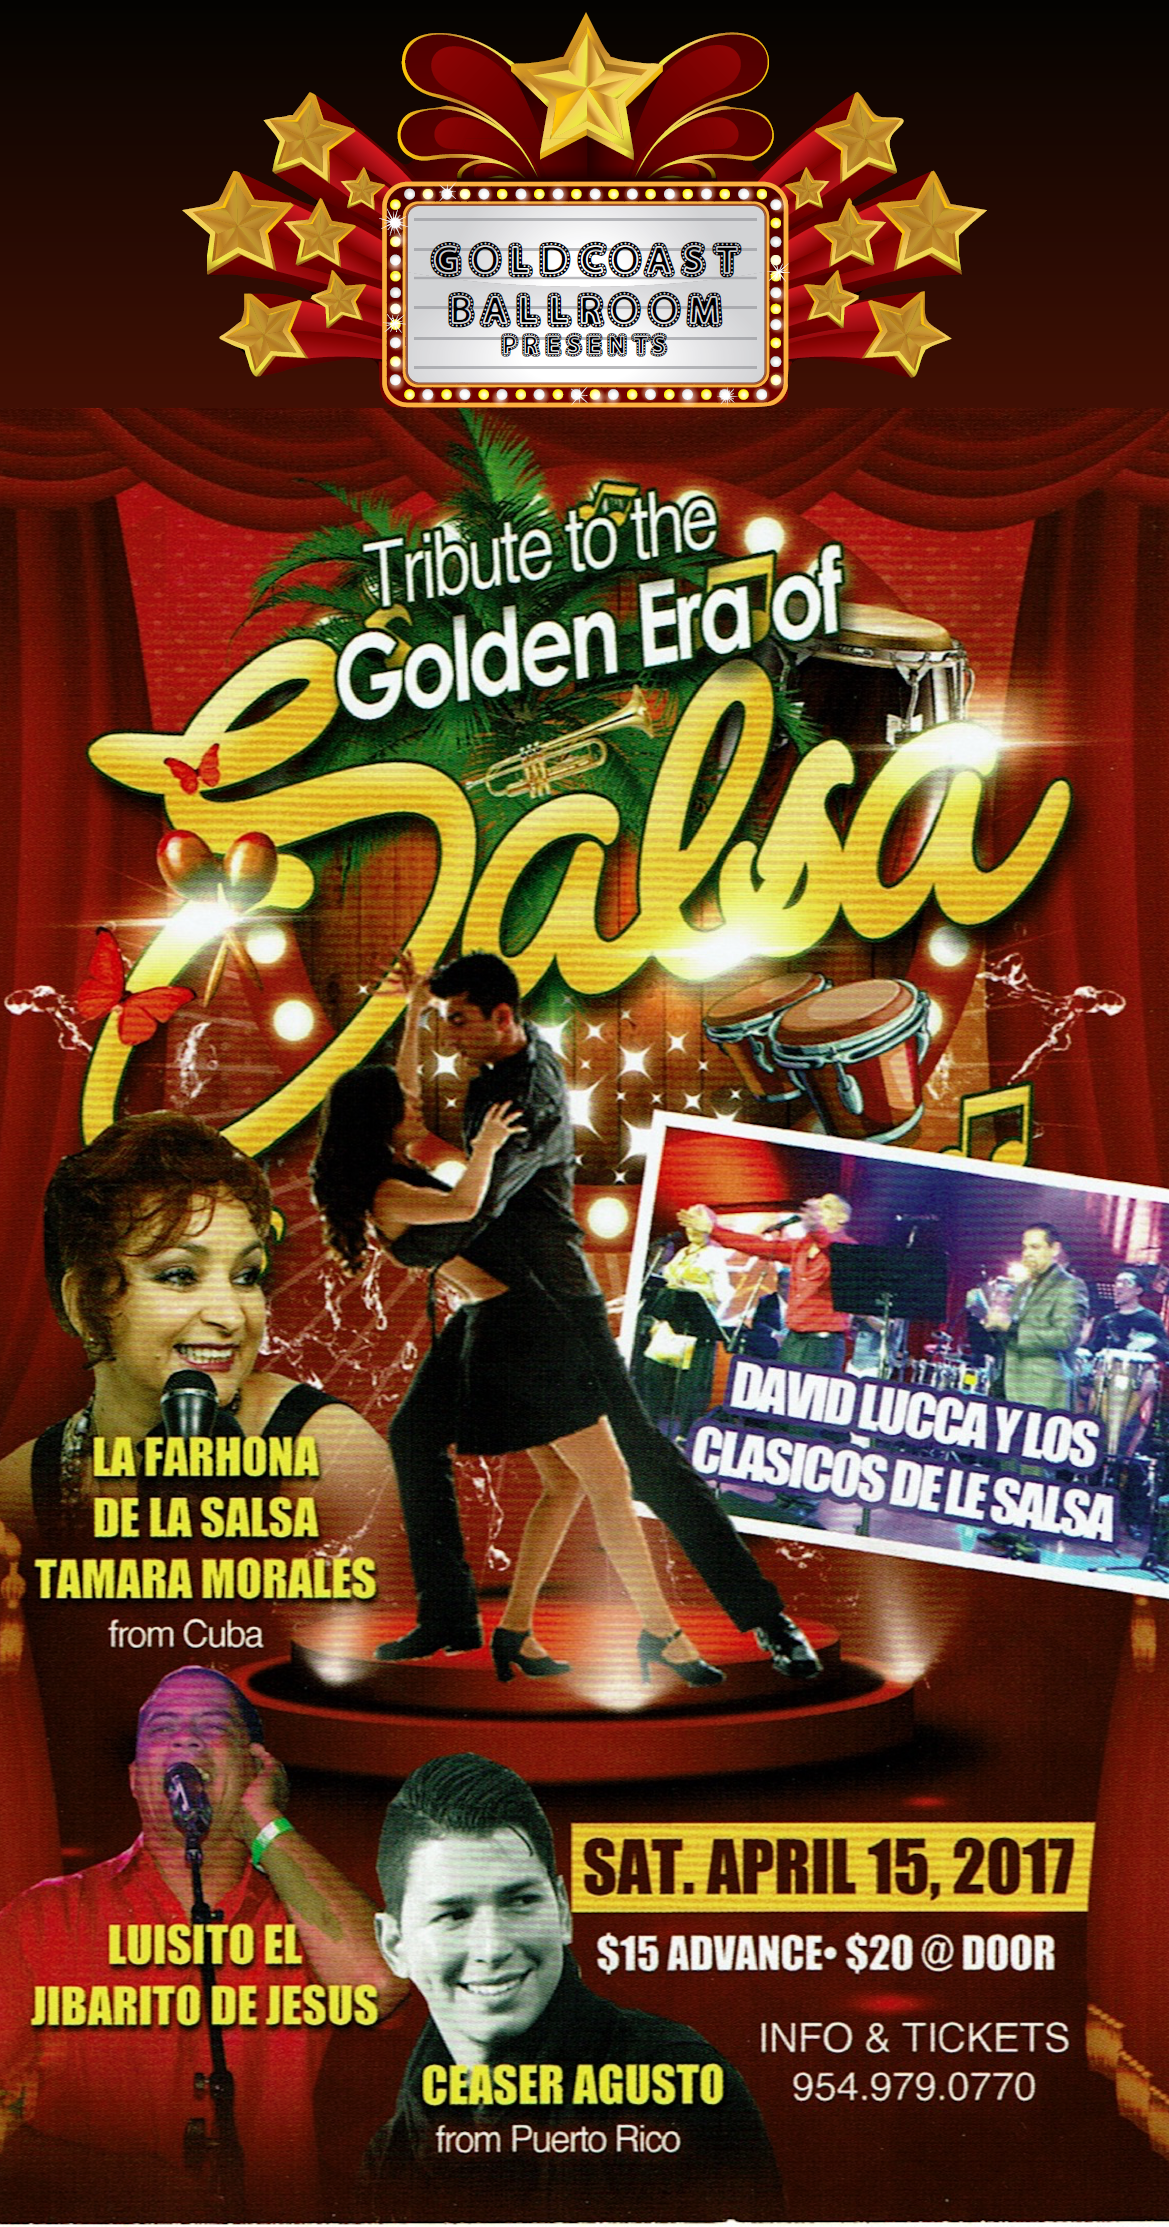 Tribute to the Golden Era Of Salsa - with David Lucca y Los Clasicos de La Salsa - Saturday, April 15, 2017 at Goldcoast Ballroom